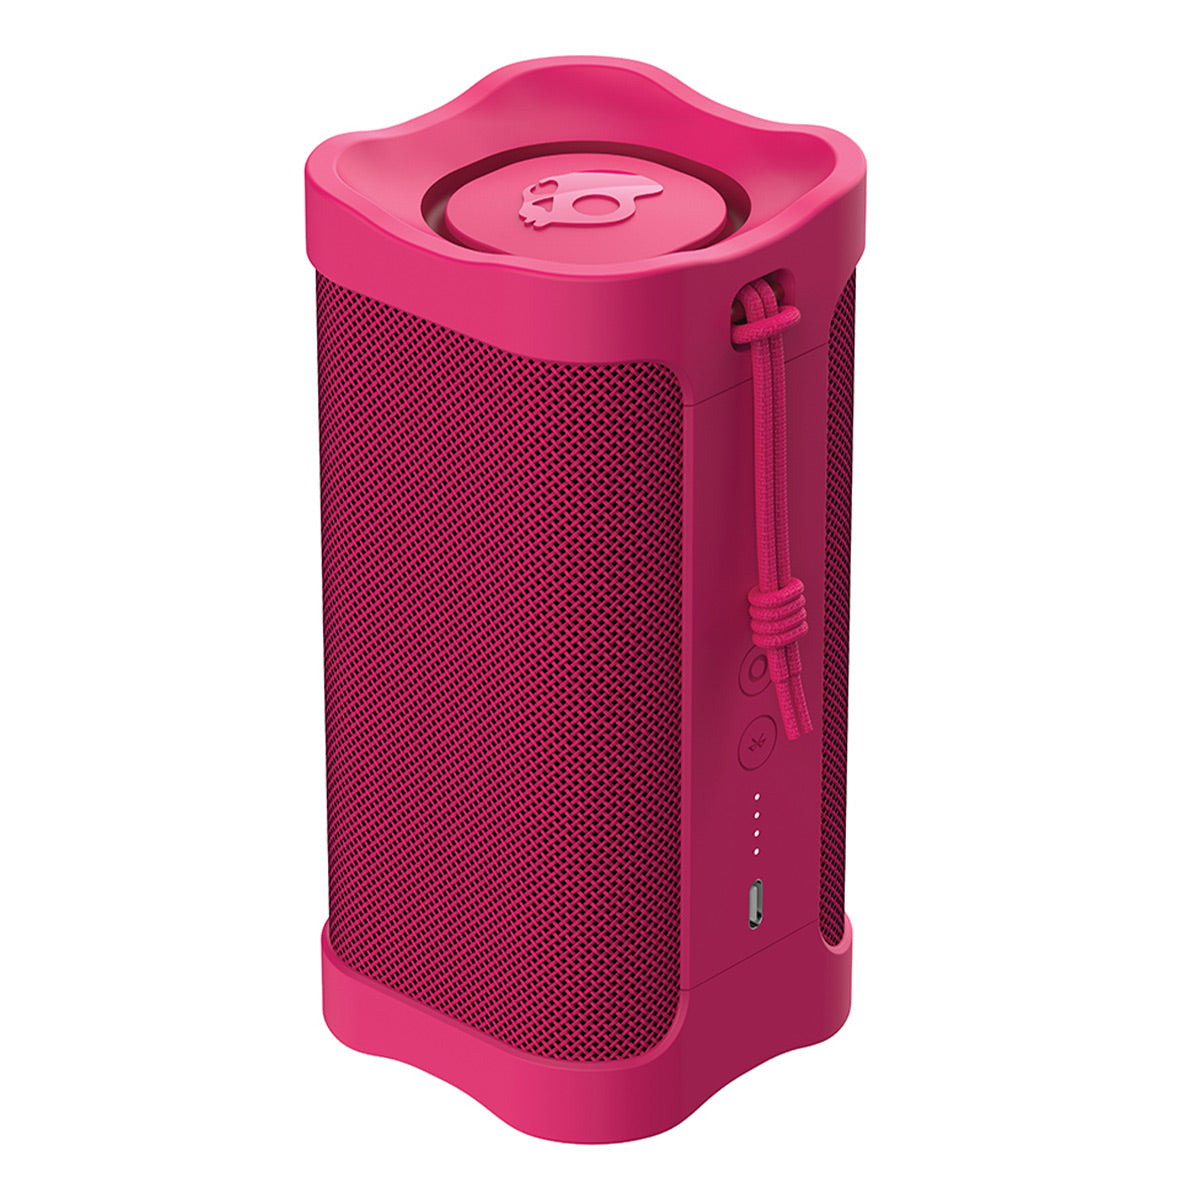 Skullcandy Terrain Wireless Bluetooth Speaker with IPX7 Waterproof Rating (Pink)